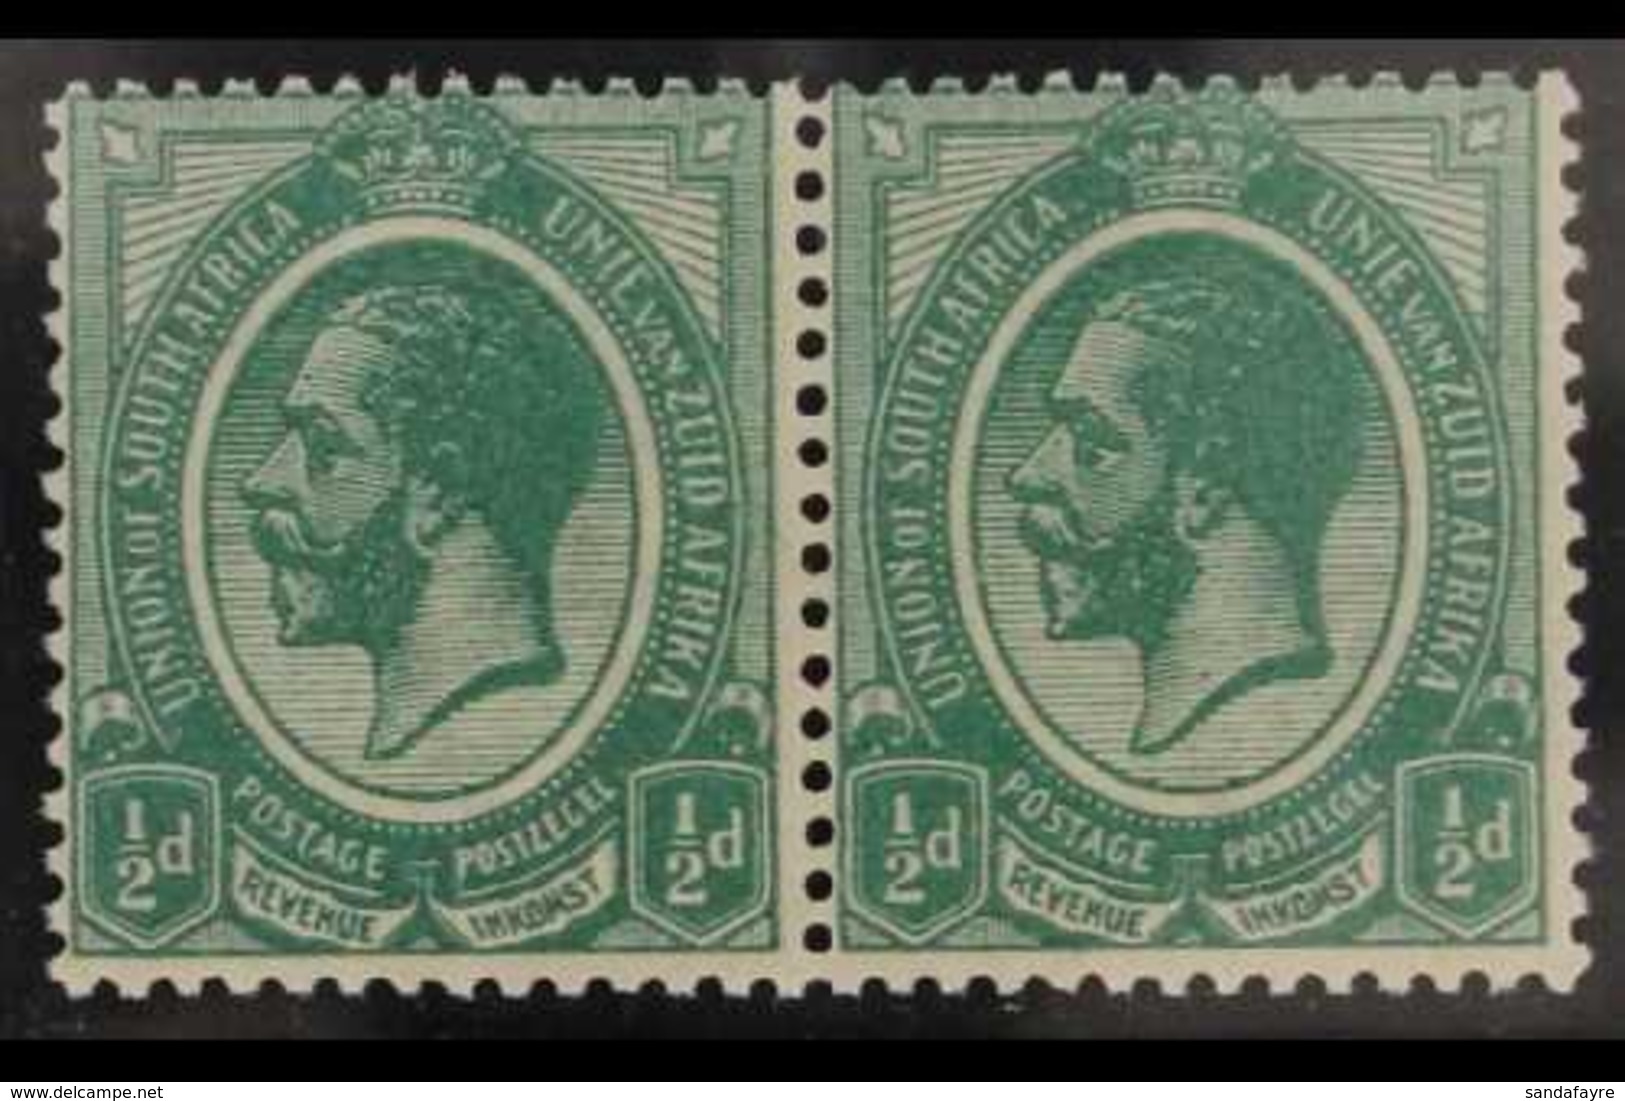 1913-24 ½d DARK MOSSY GREEN, Horizontal Pair, SACC 2e, Never Hinged Mint, Certificate Accompanies. Rare & Distinct Shade - Non Classés